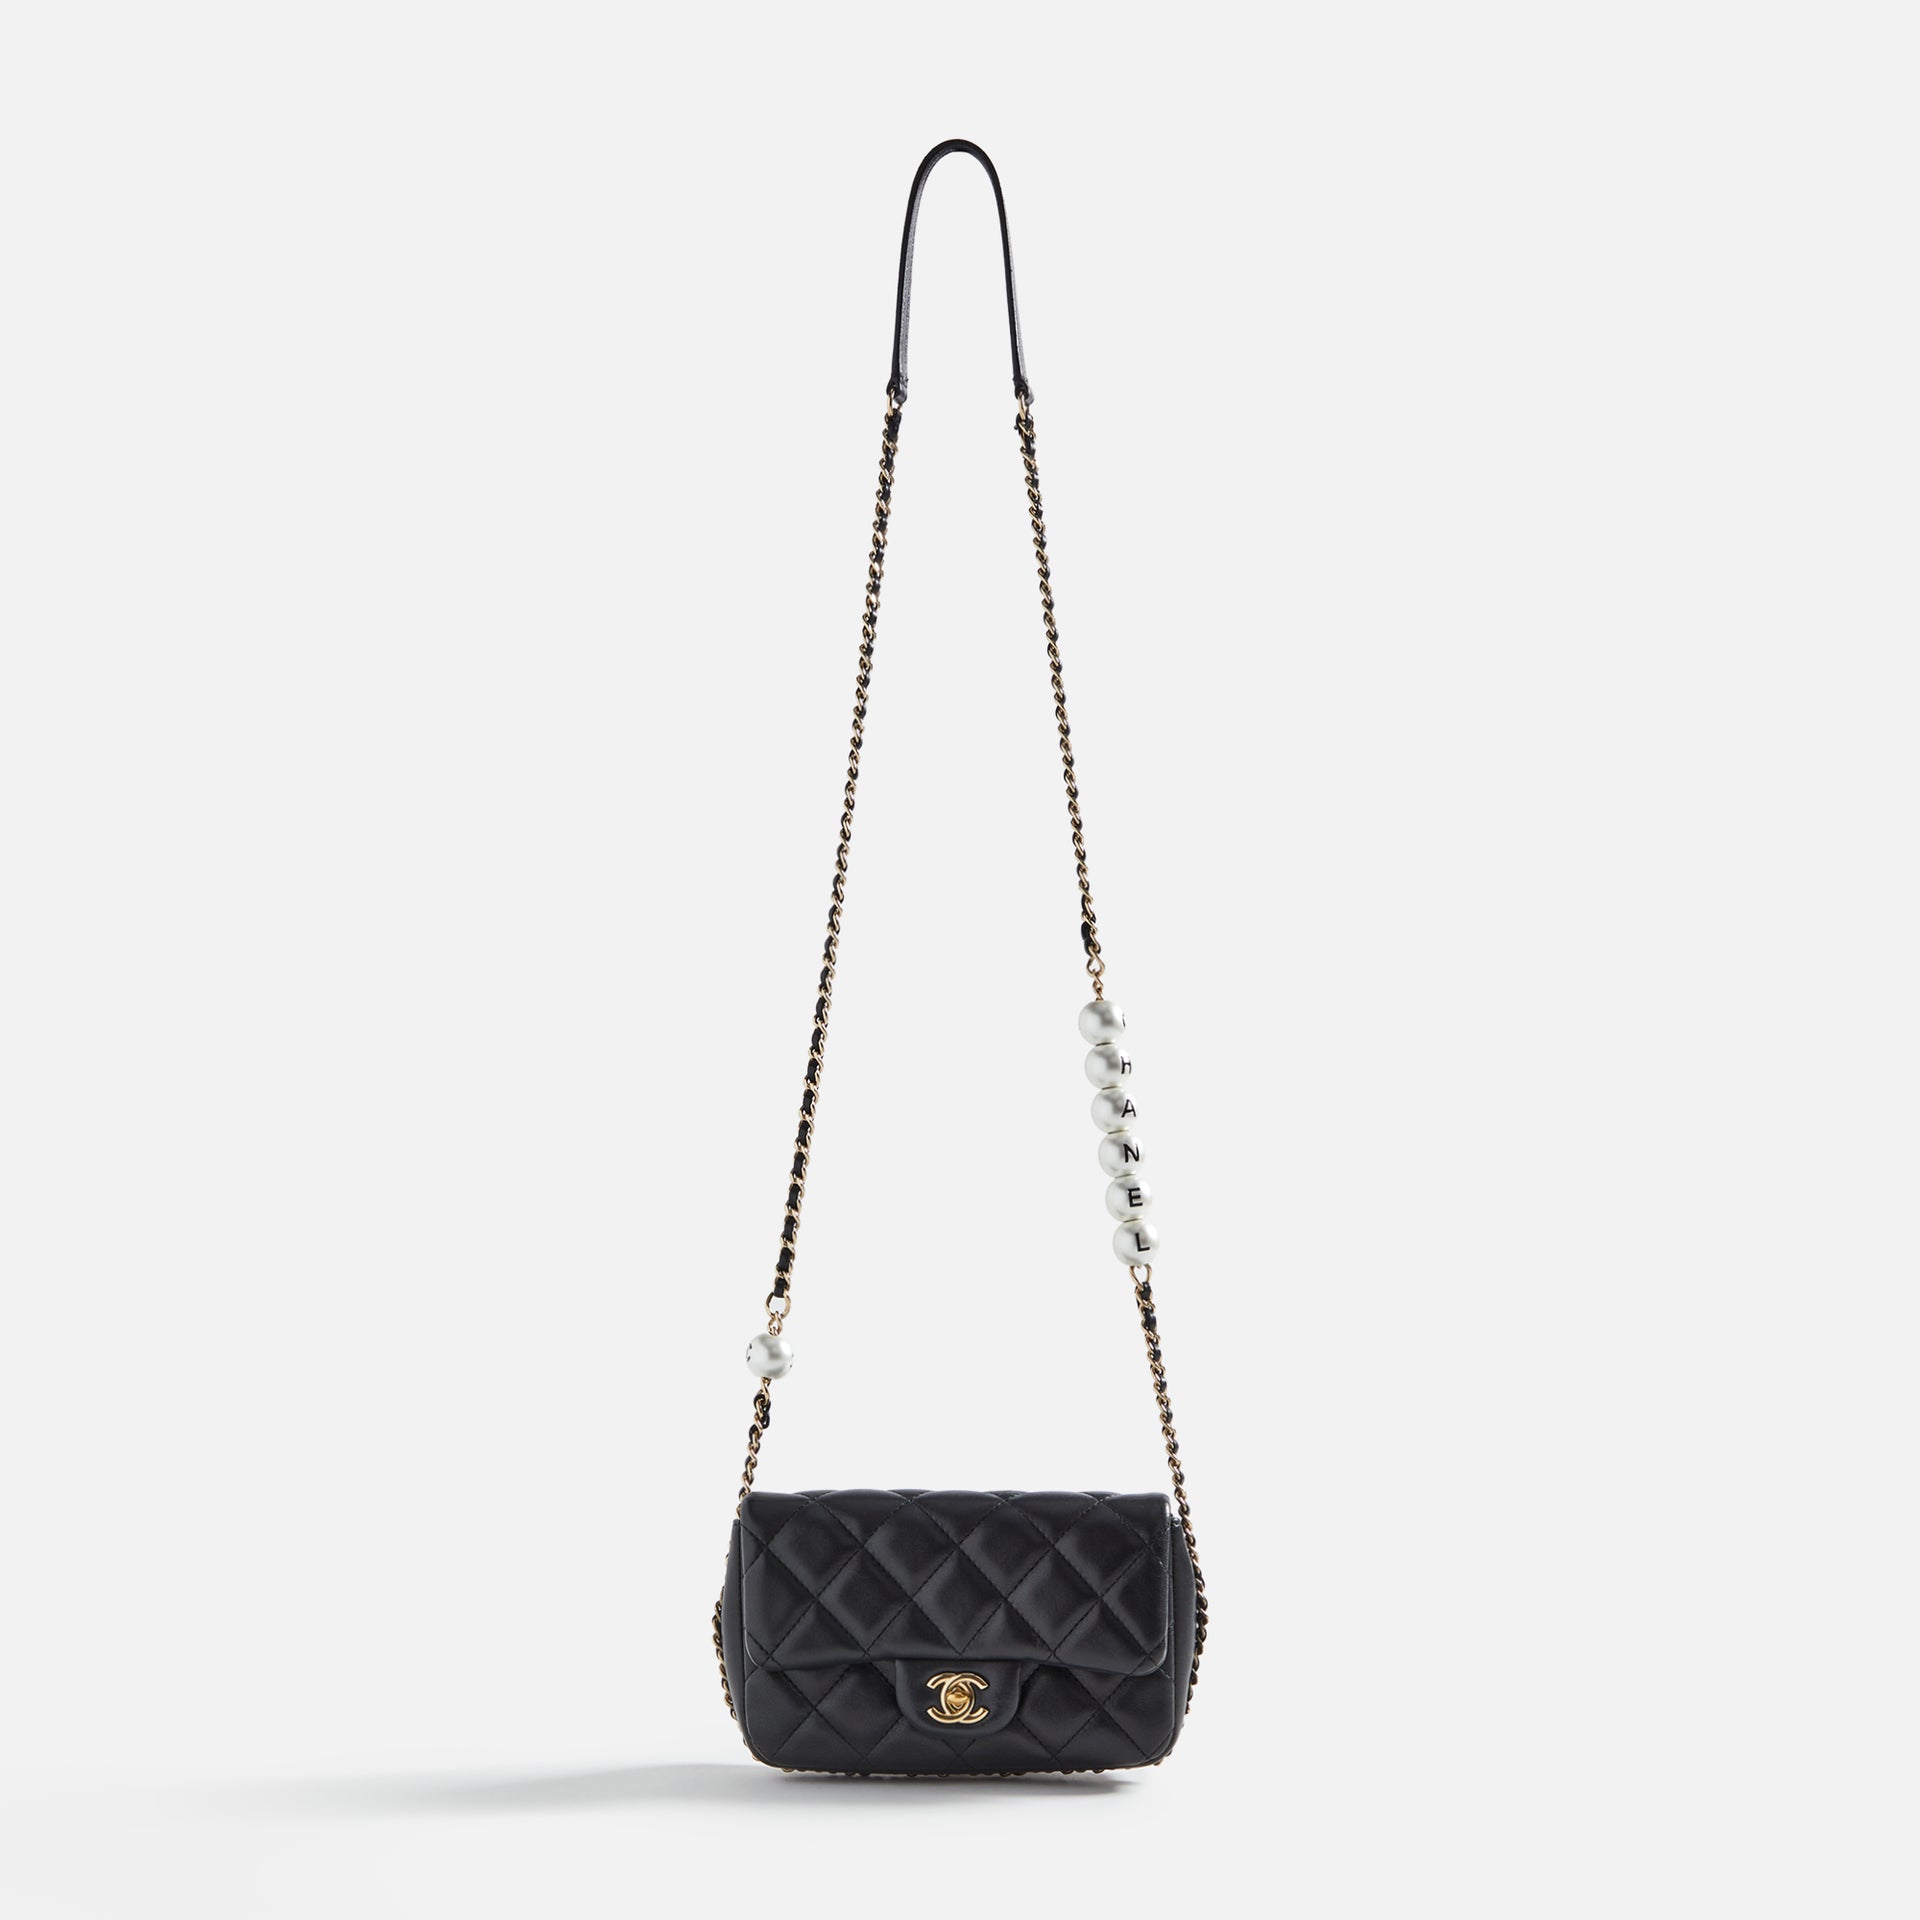 WGACA Chanel Lambskin Pearl Logo Flap Bag - Black